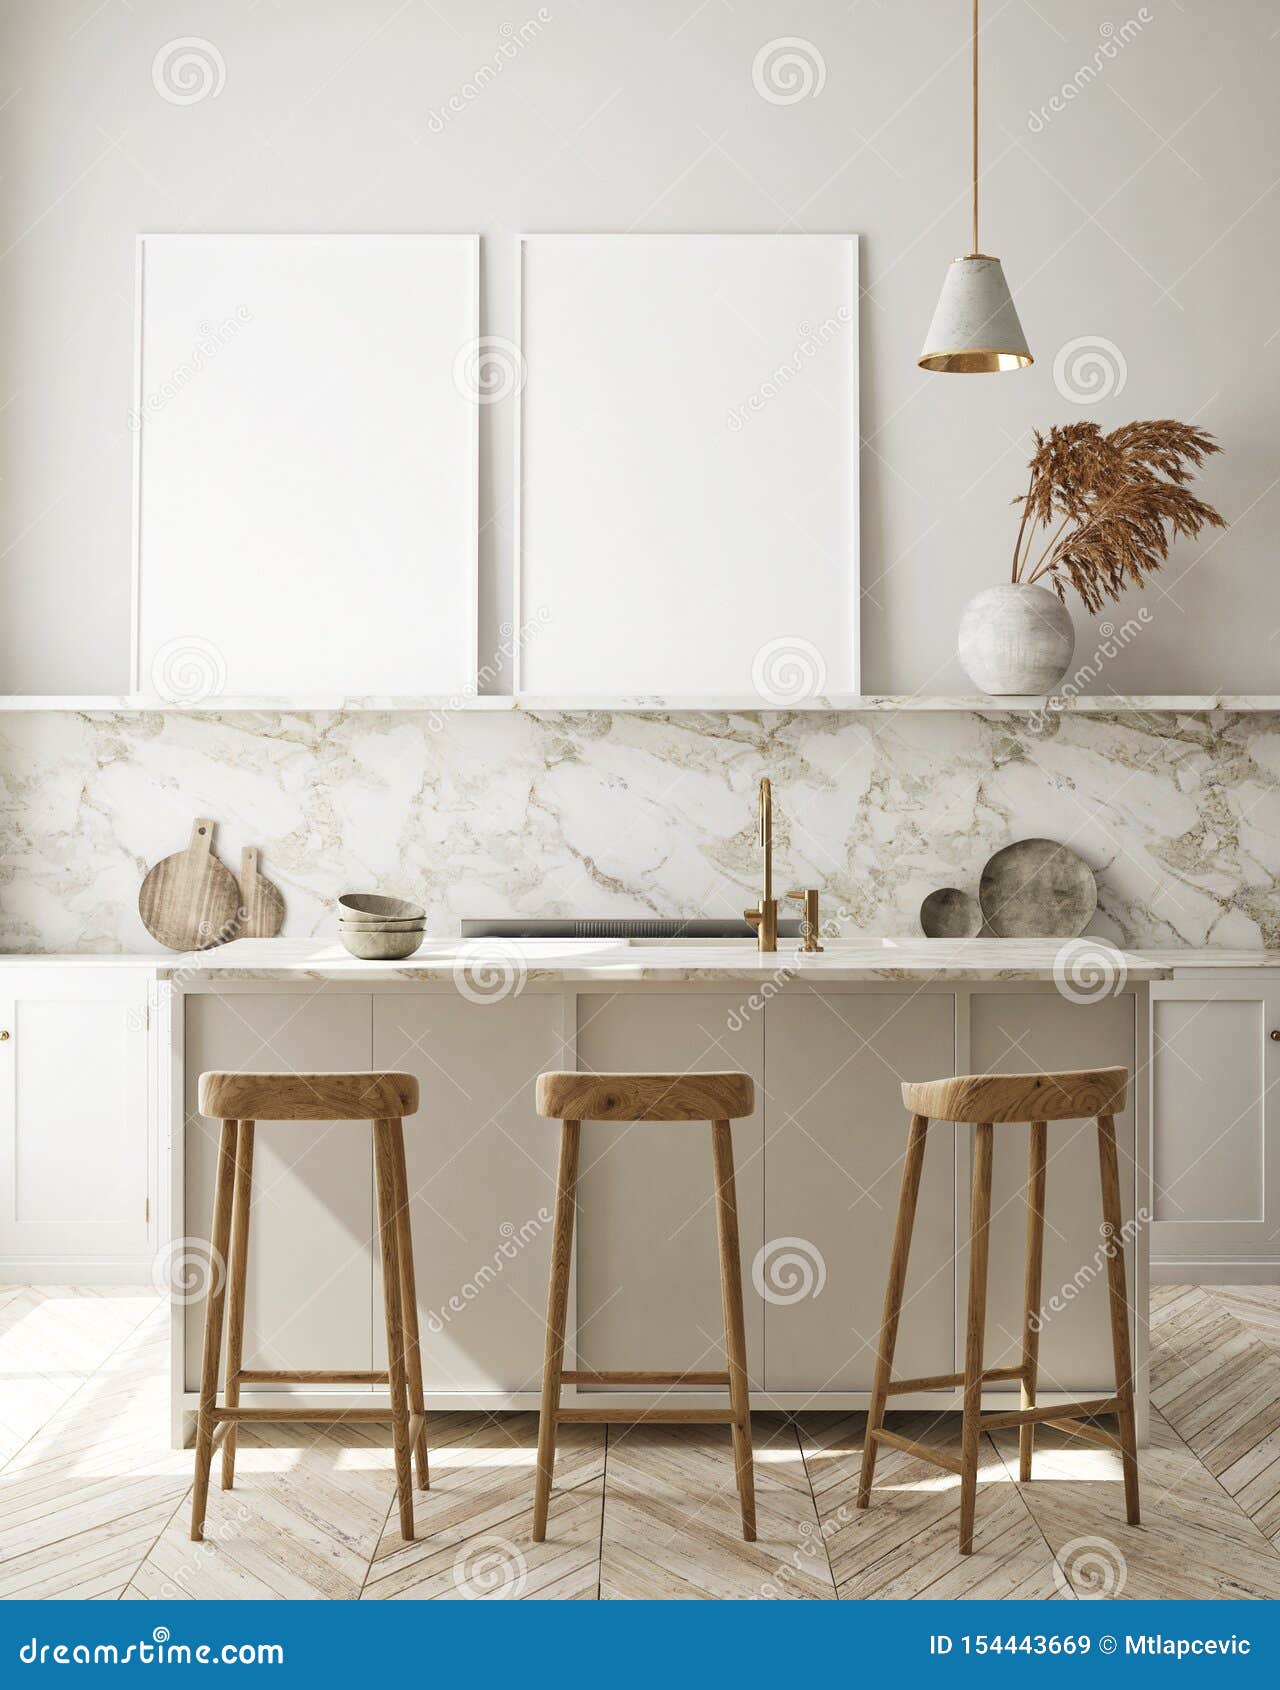 mock up poster frame in modern interior background, kitchen, scandinavian style, 3d render